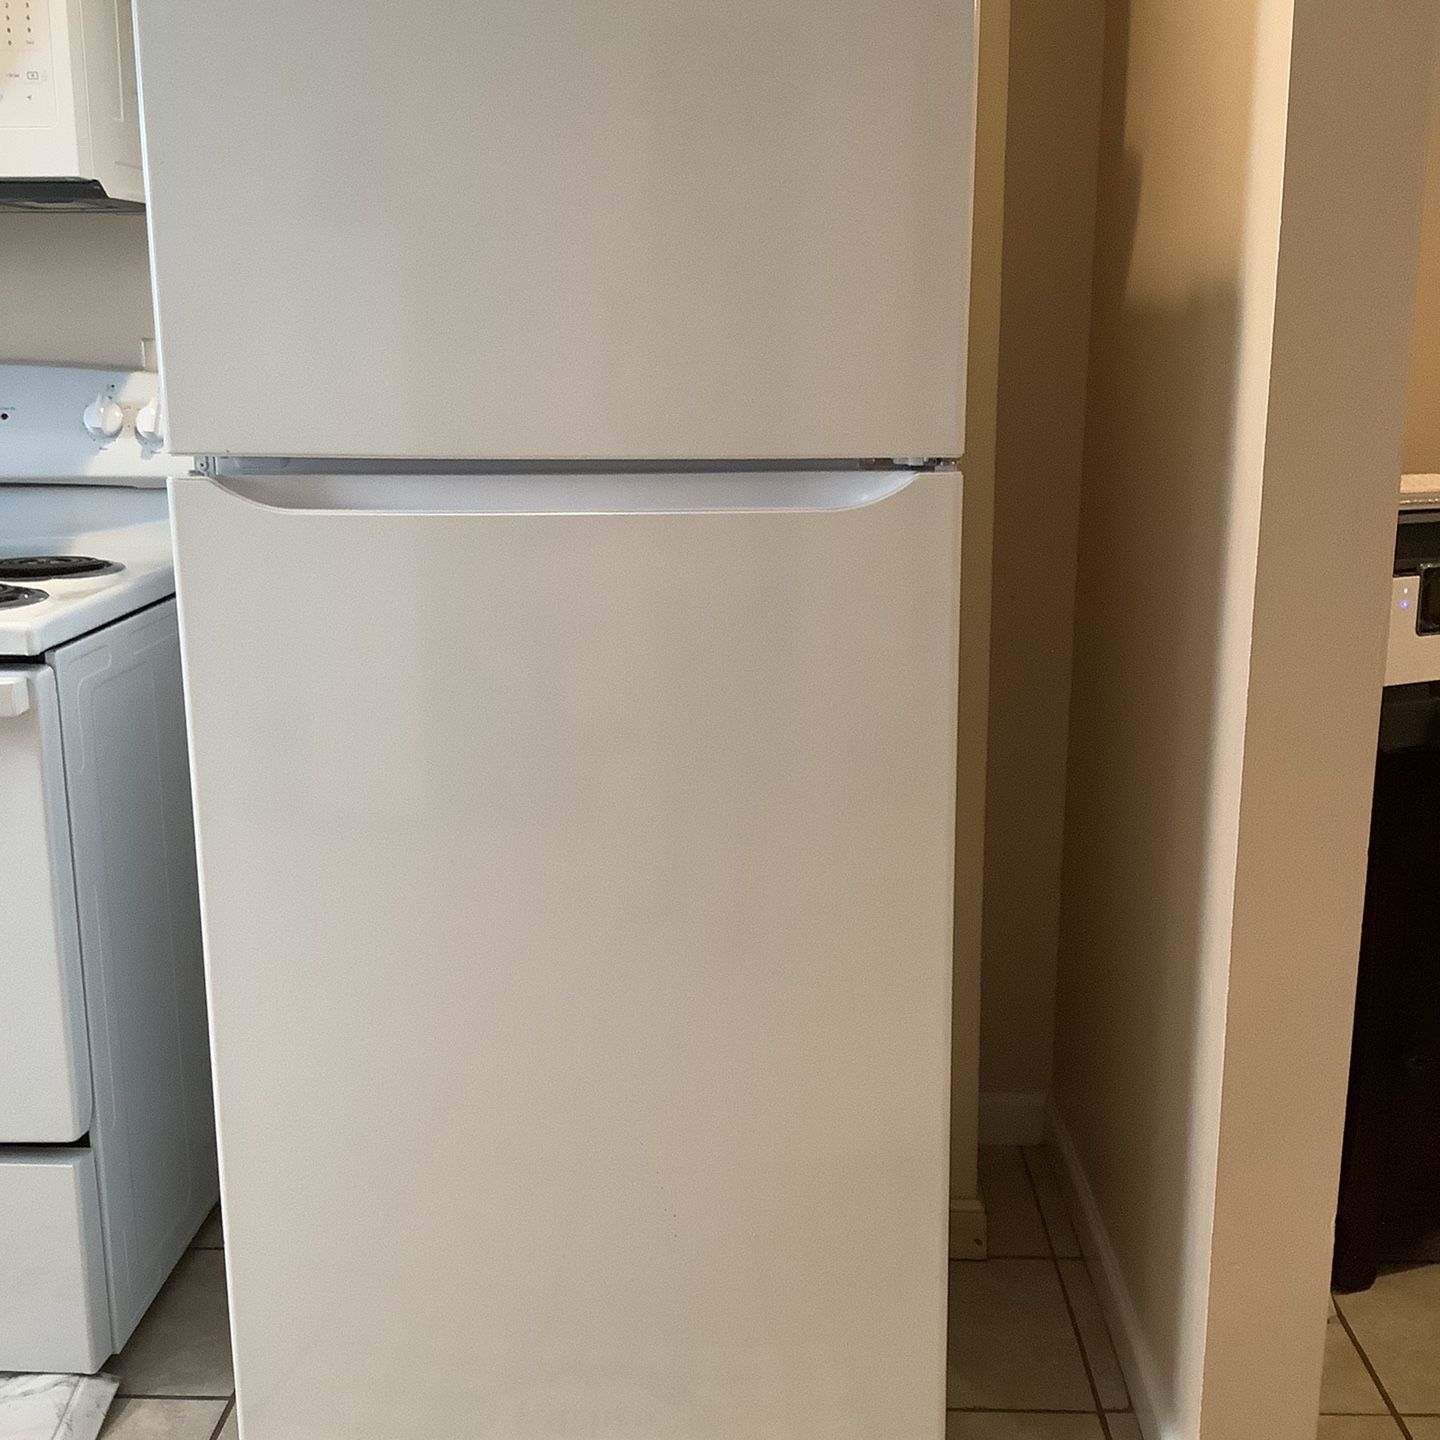 LG Refrigerator For Sale